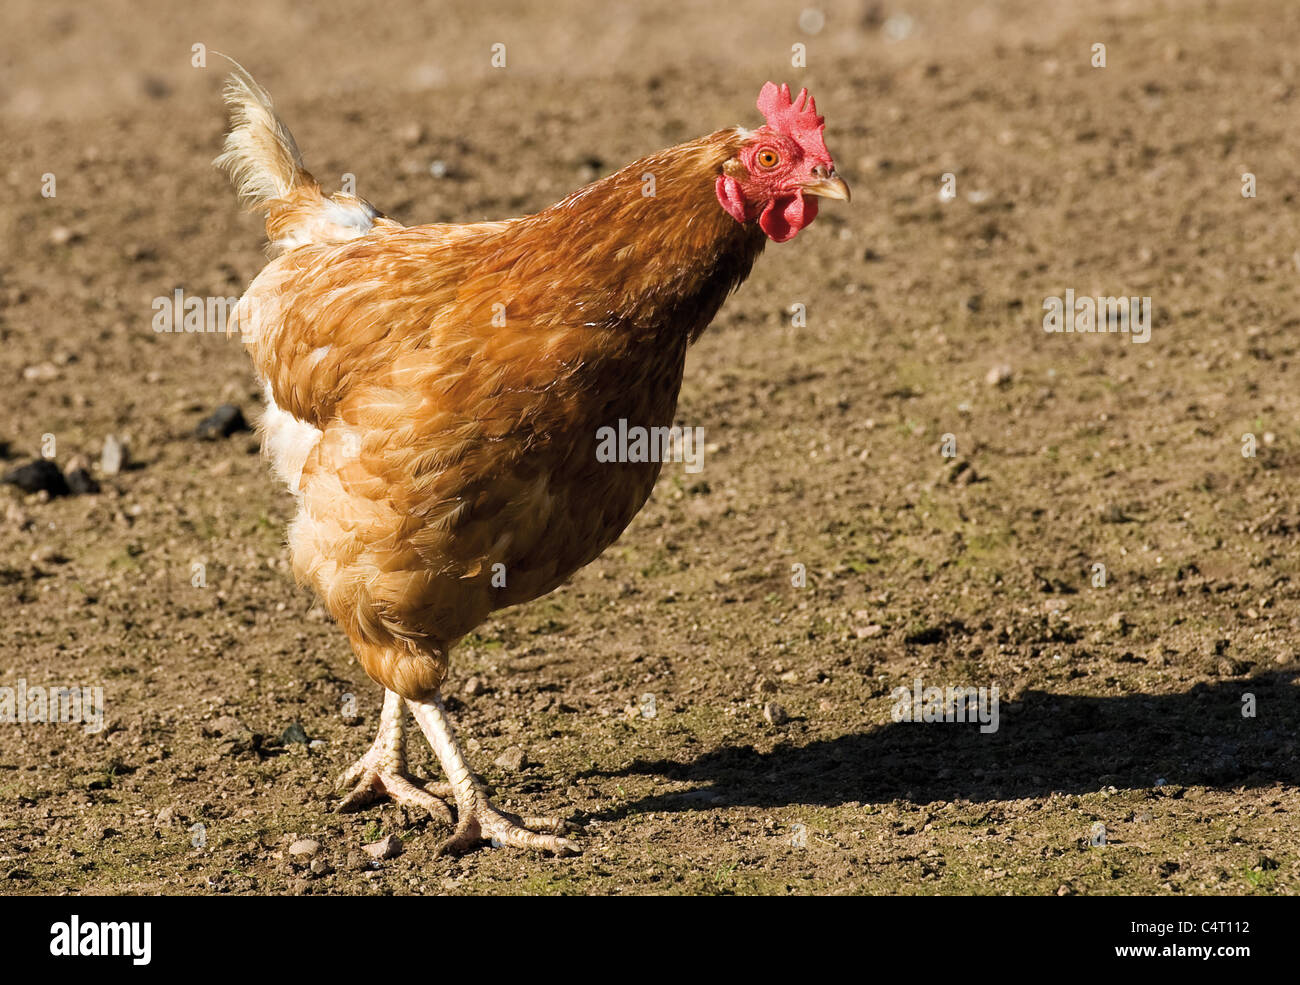 Free Range gallina gallina granja campo agricultura La agricultura Escocia UK Foto de stock